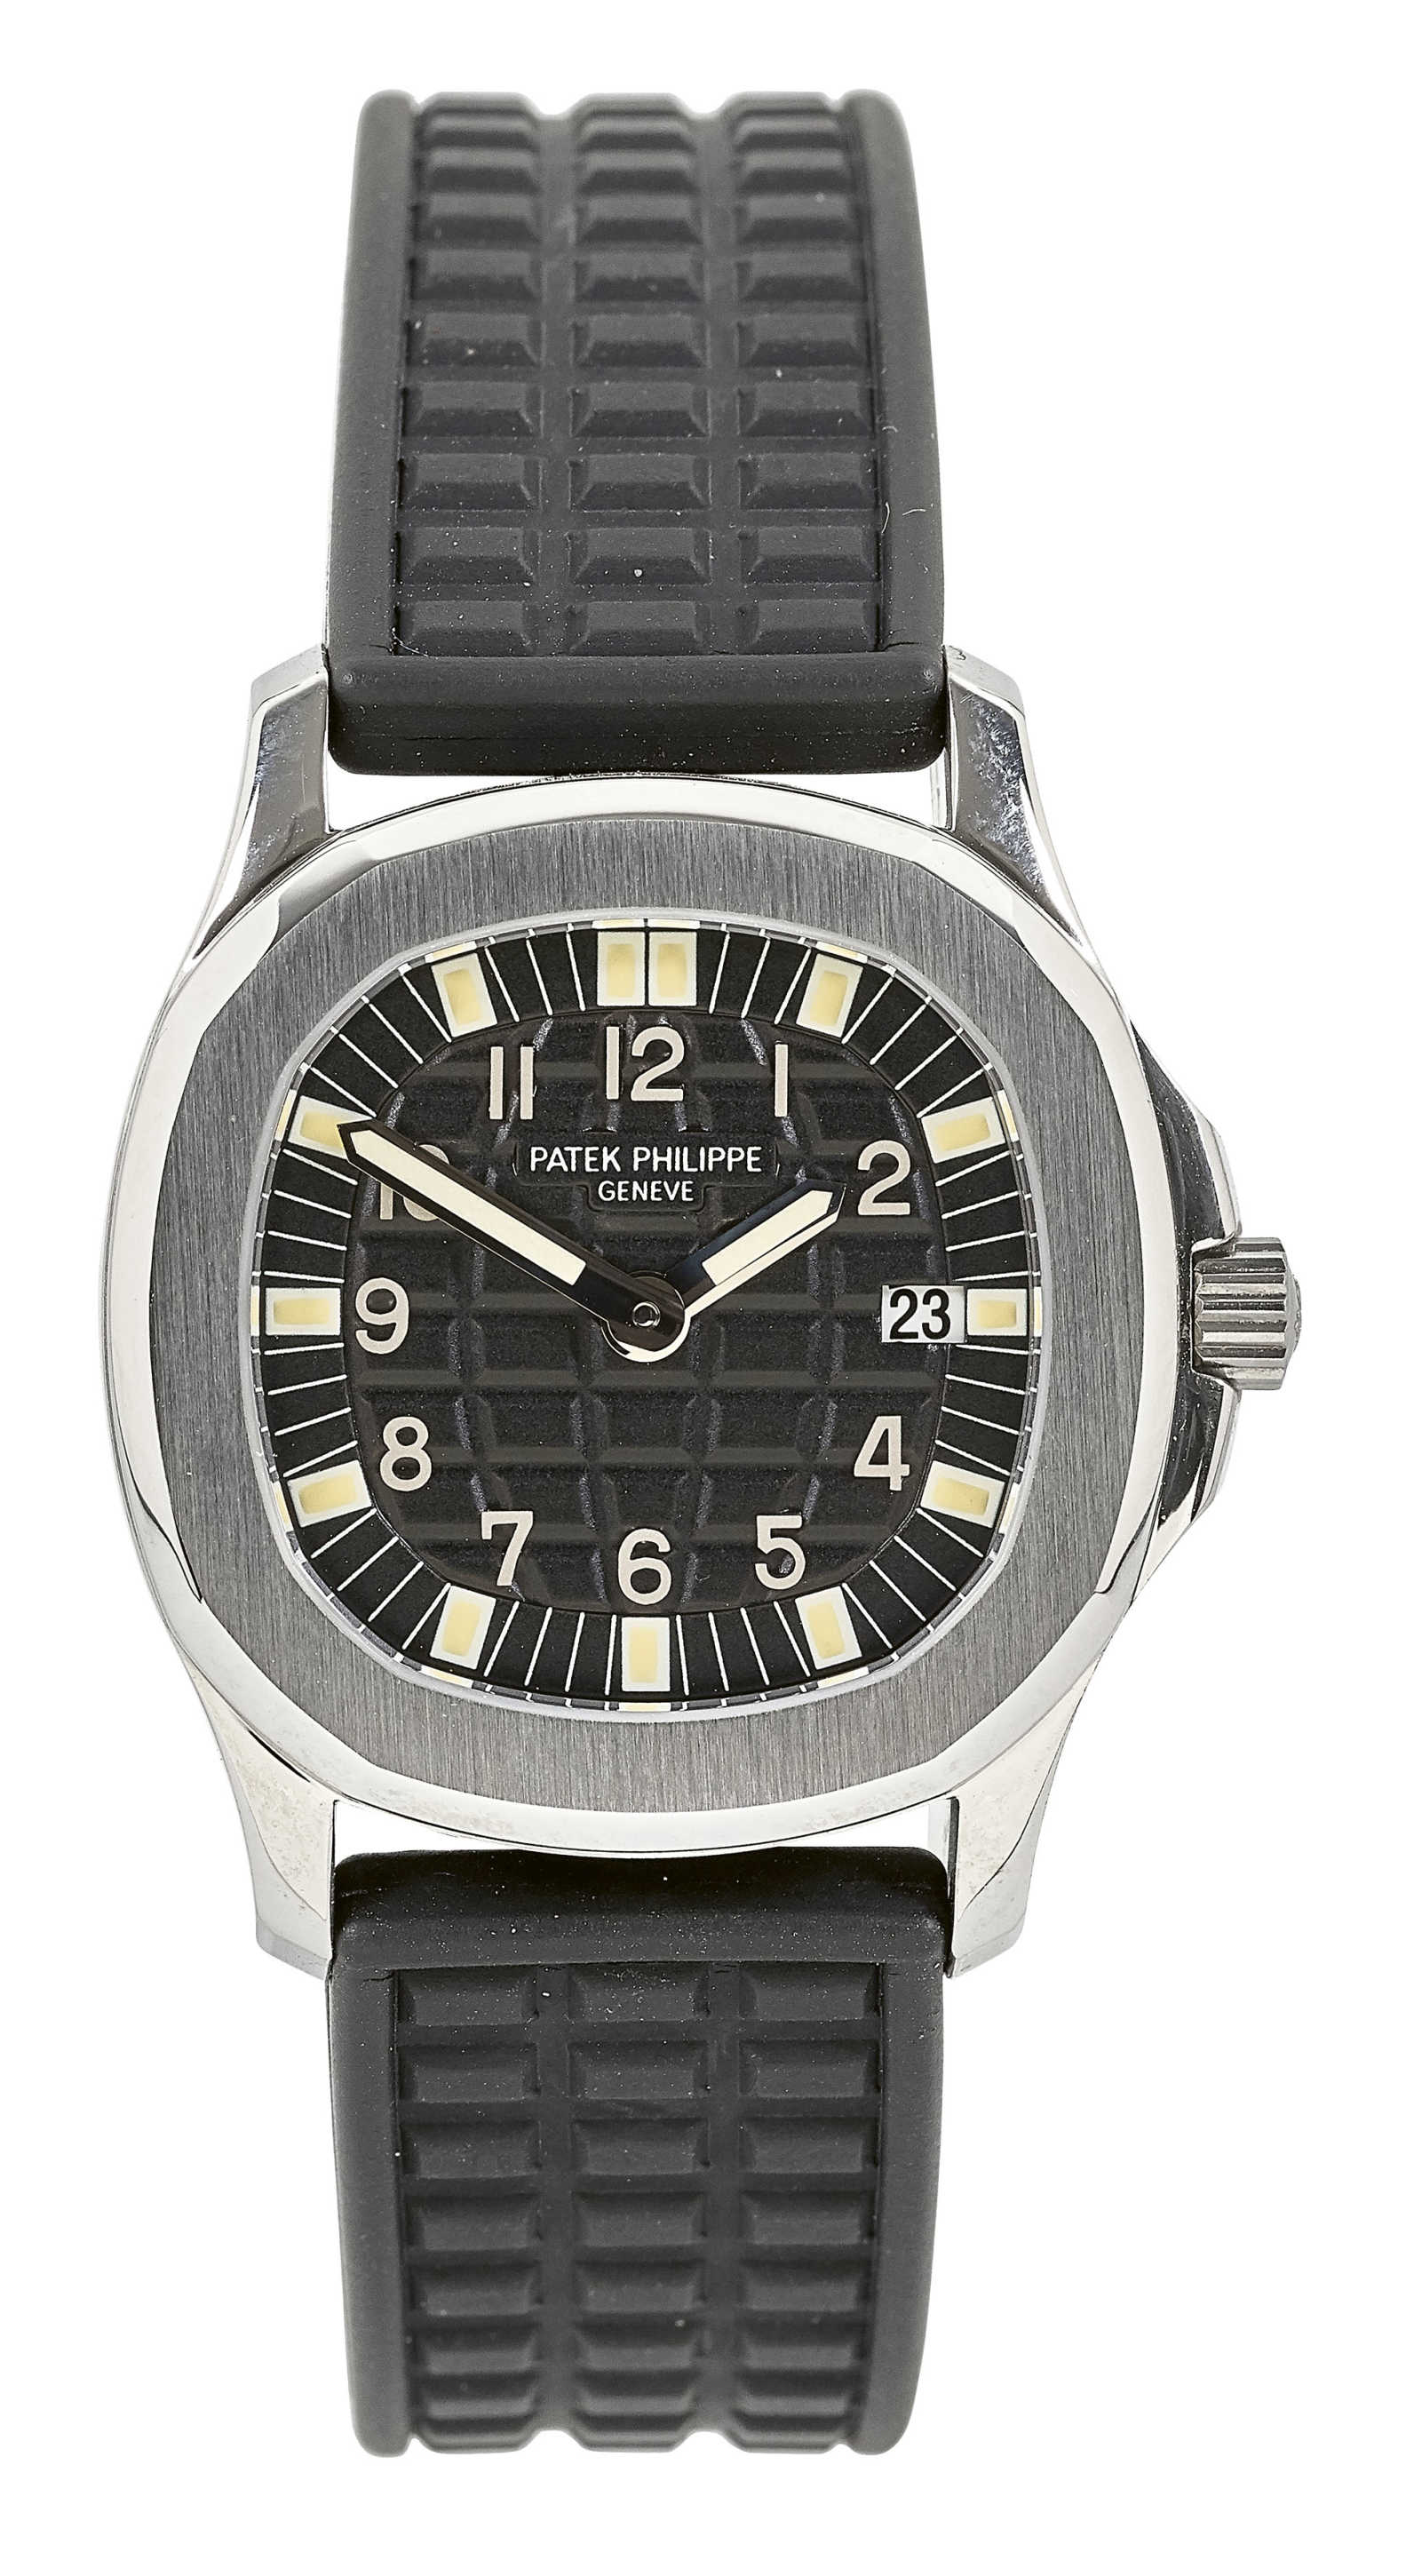 PATEK PHILIPPELady's wristwatch "Aquanaut".Manufacturer/Manufaktur: Patek Philippe, Geneva. - Image 2 of 2